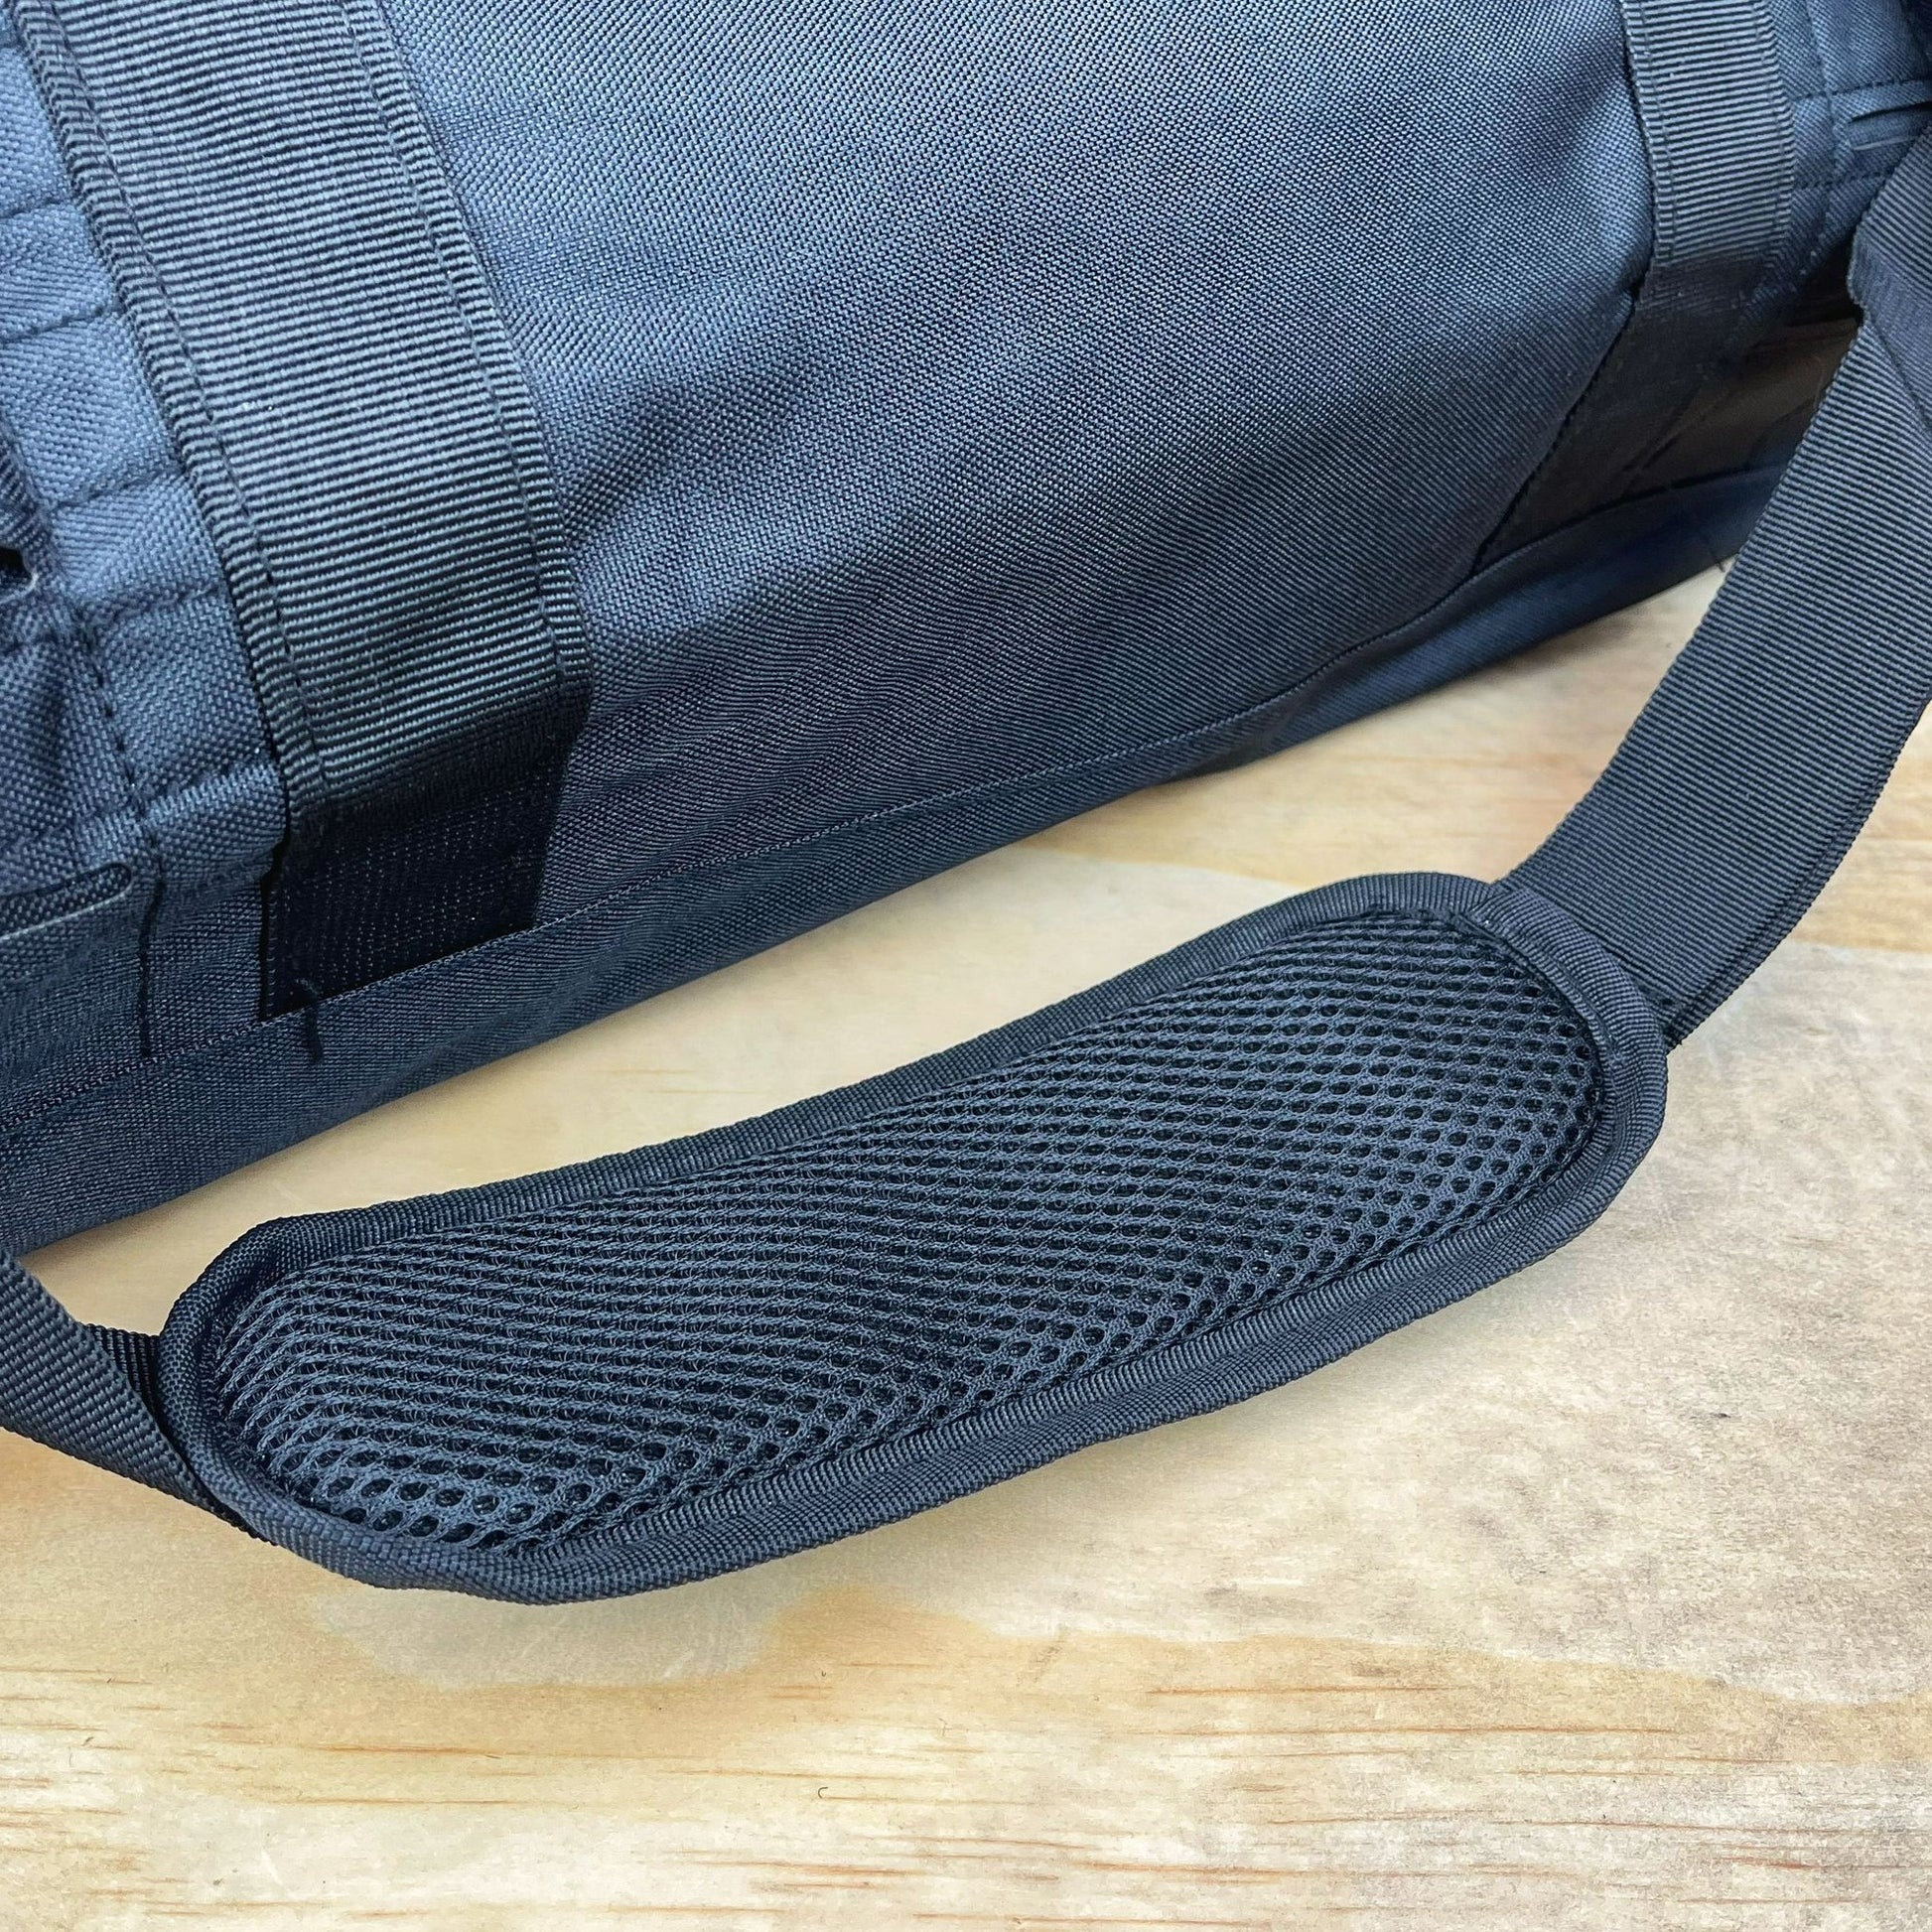 Duffel bag, shoulder strap